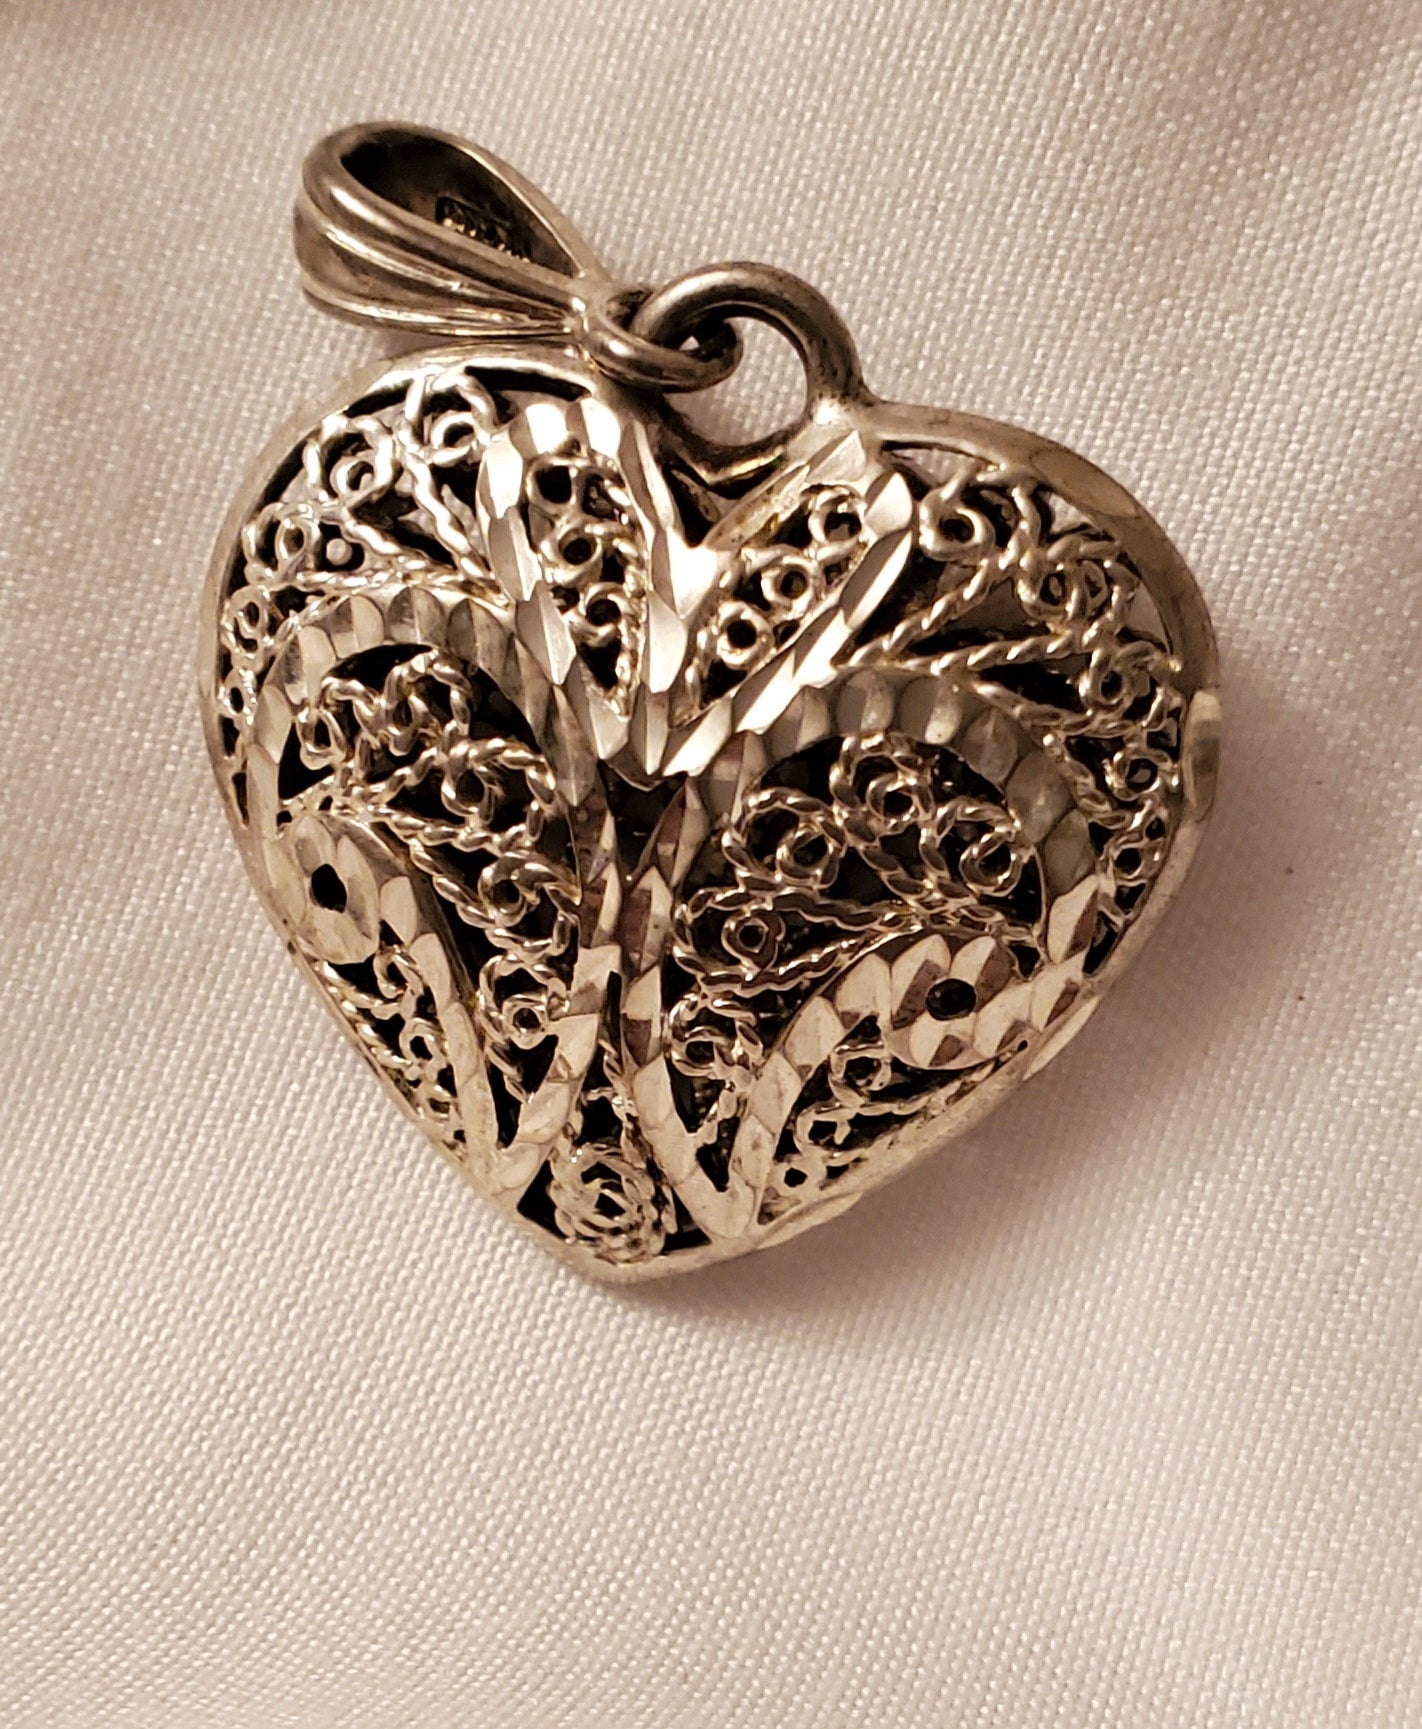 Filigree Heart Charms (6pcs / 26mm x 21mm / Tibetan Silver) Wedding Favor Love Jewellery Pendant Valentines Day Gift Decoration CHM1546